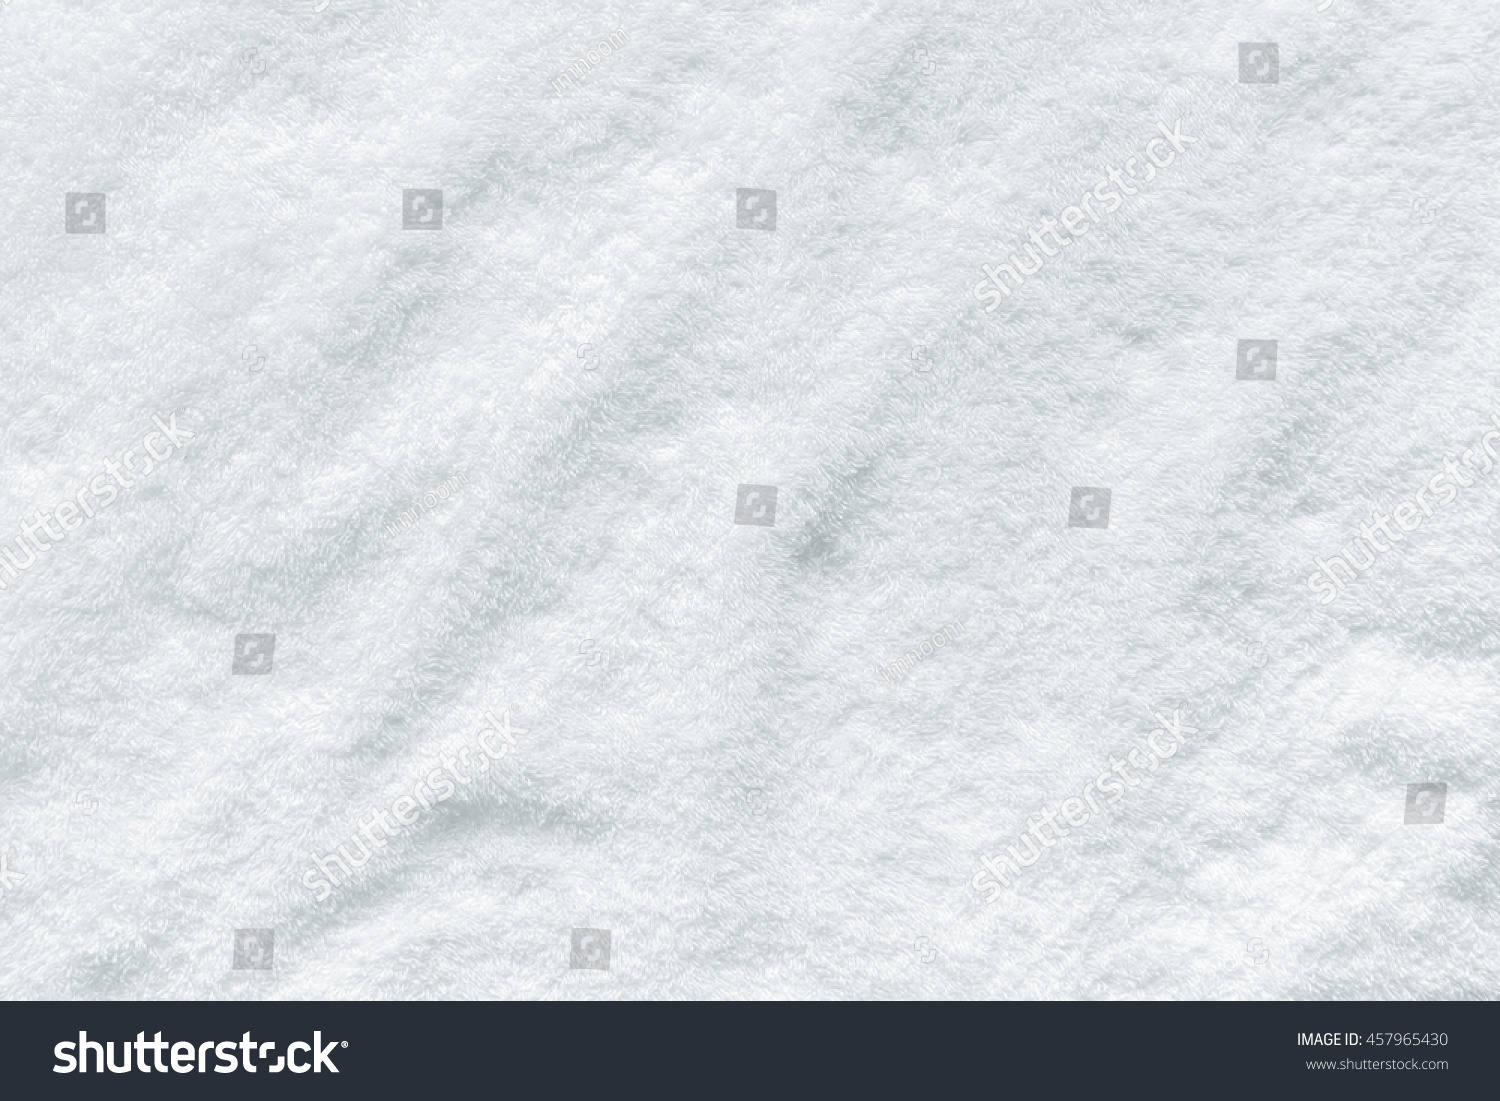 White bathroom towel texture background #457965430